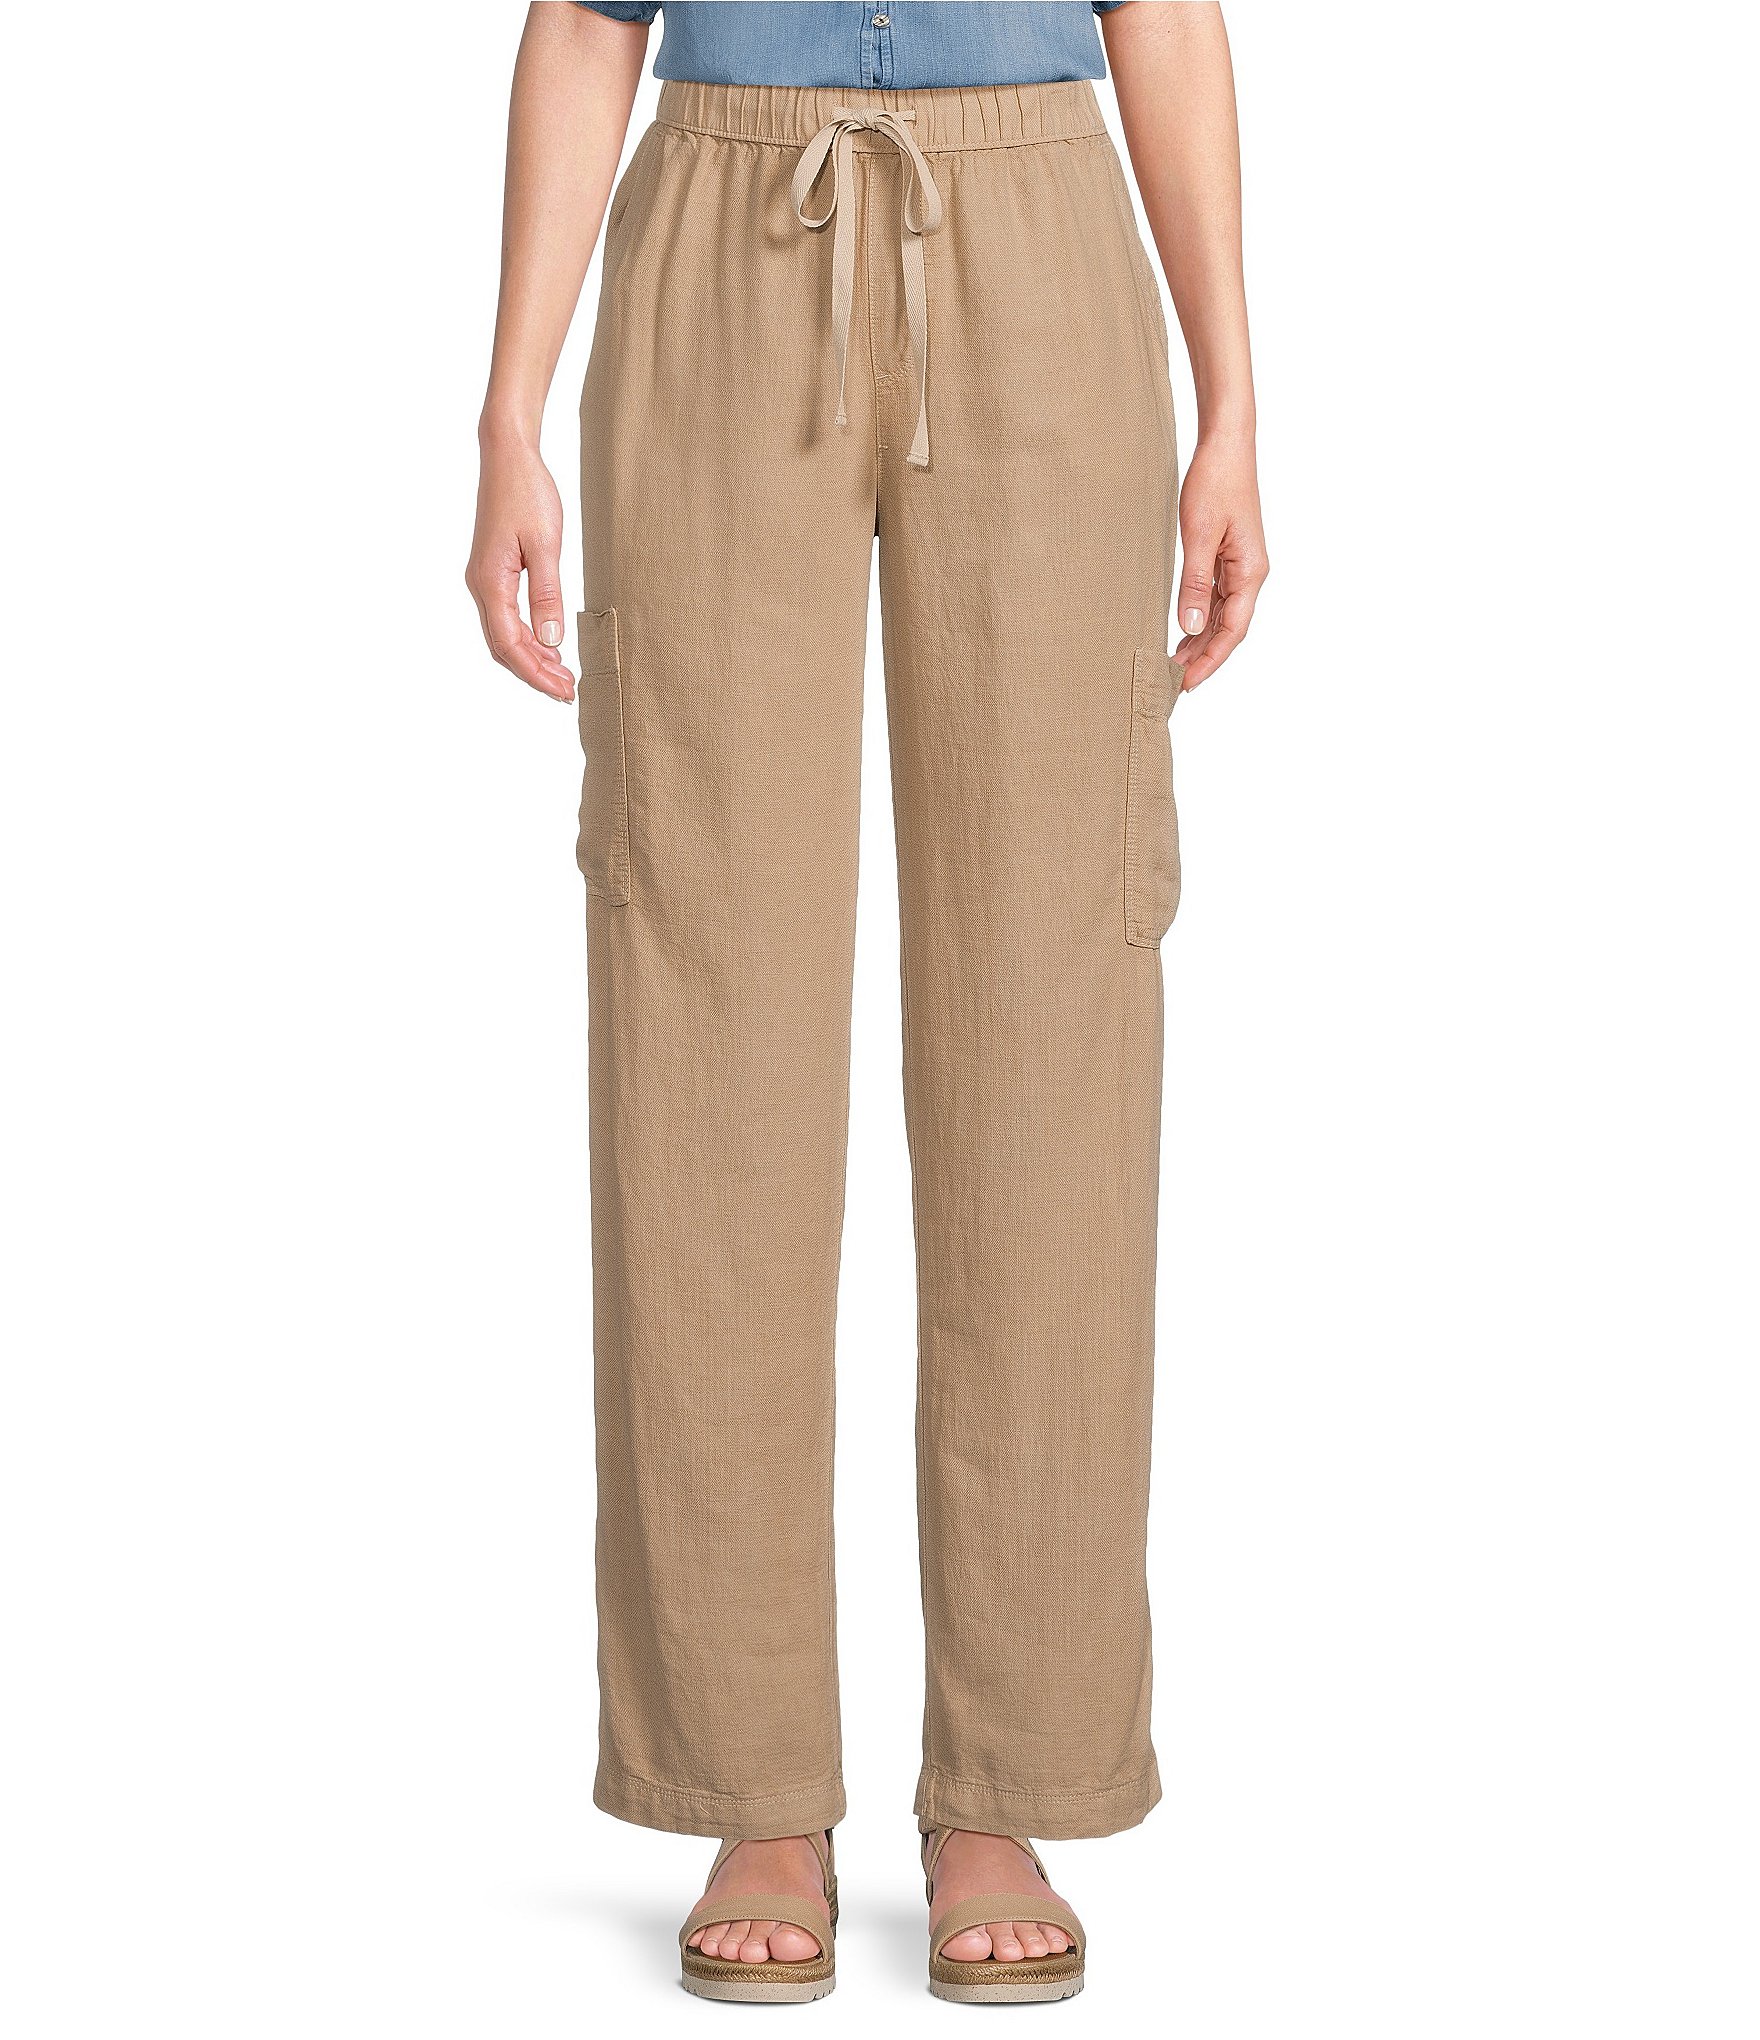 Westbound Petites Women's Cotton/lycra Tan Capri Pants Size 14 USED -   Denmark